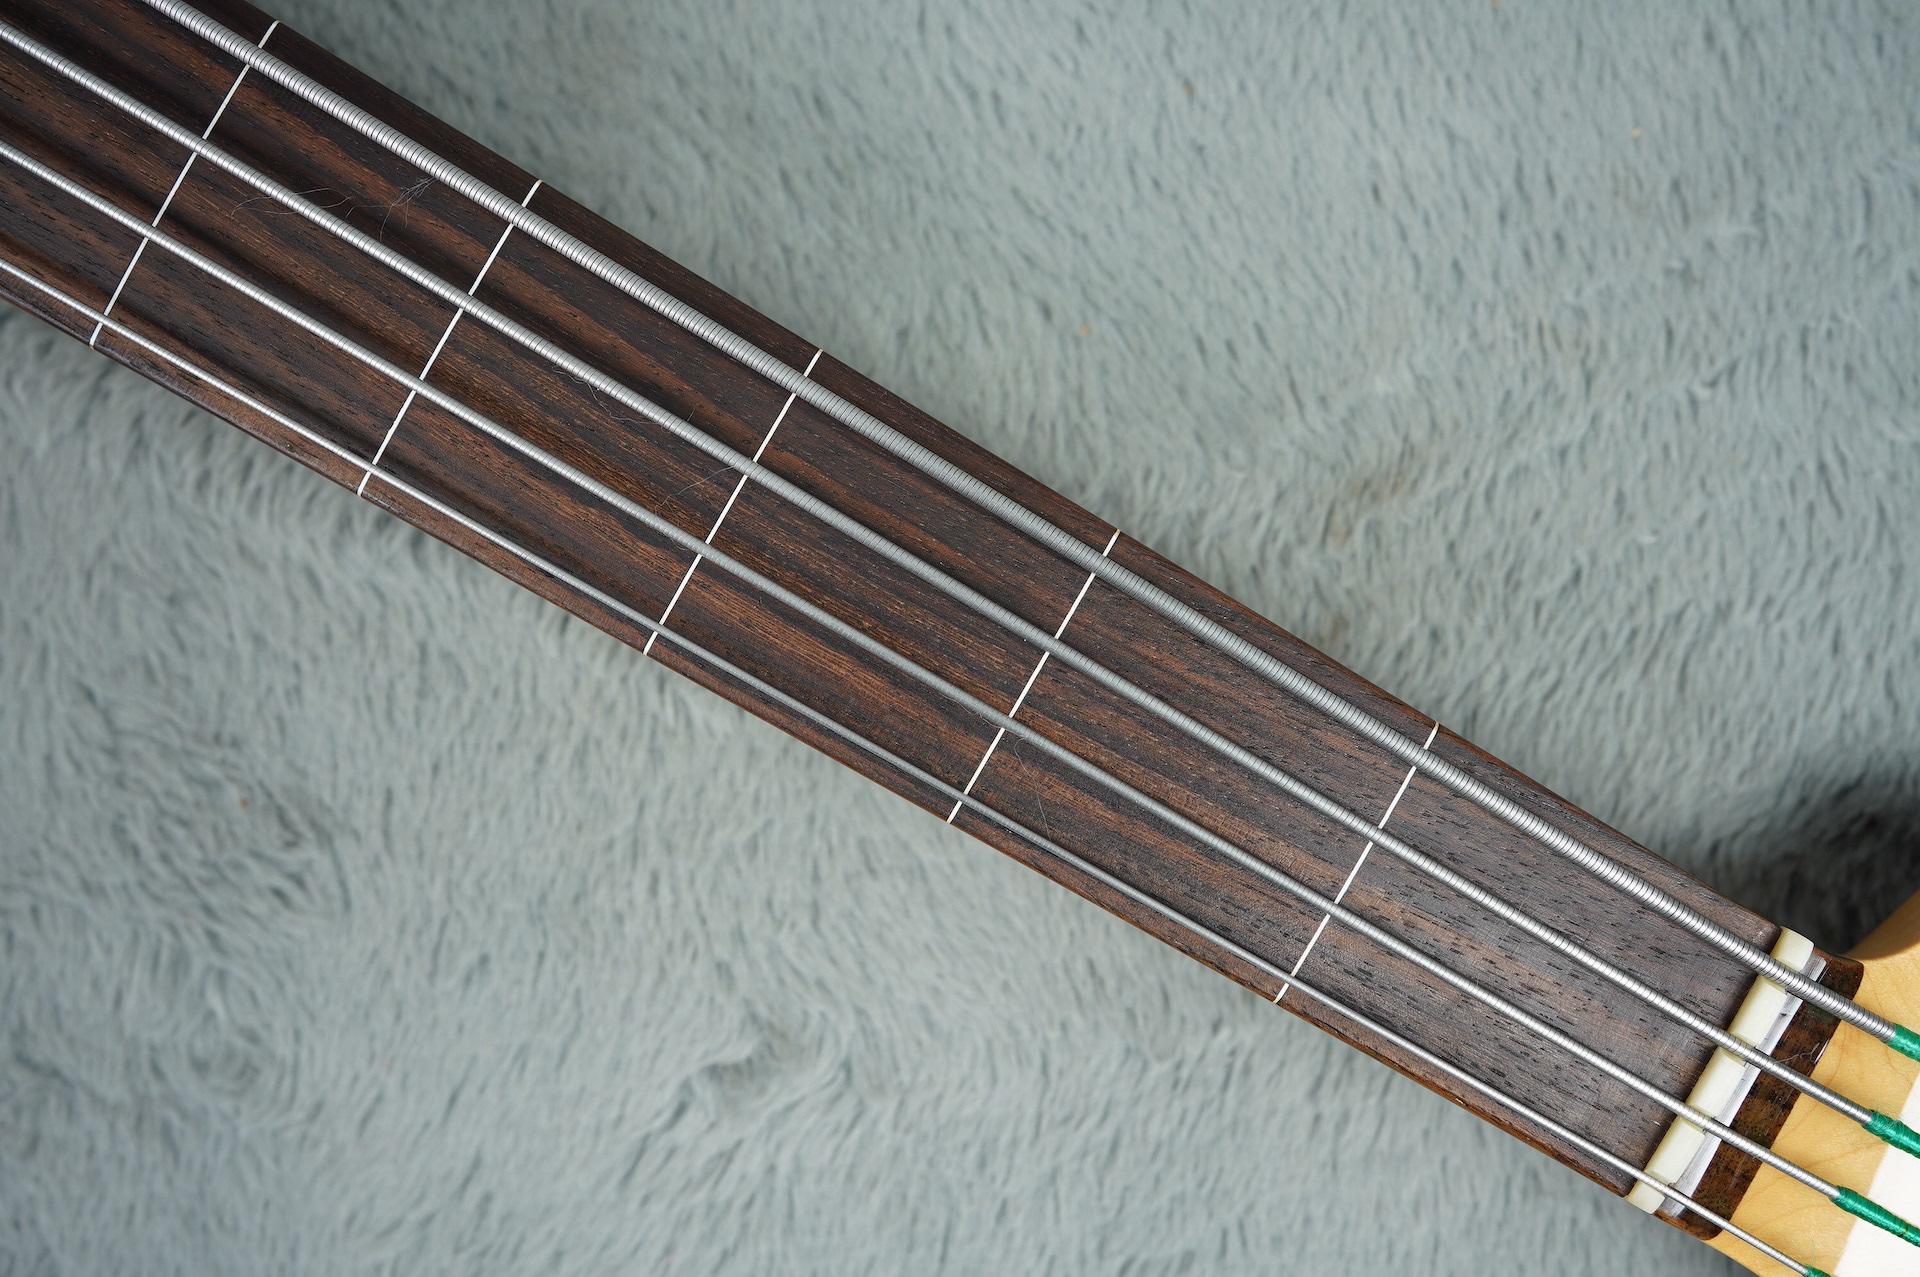 Fender American Professional Jazz Bass Fretless